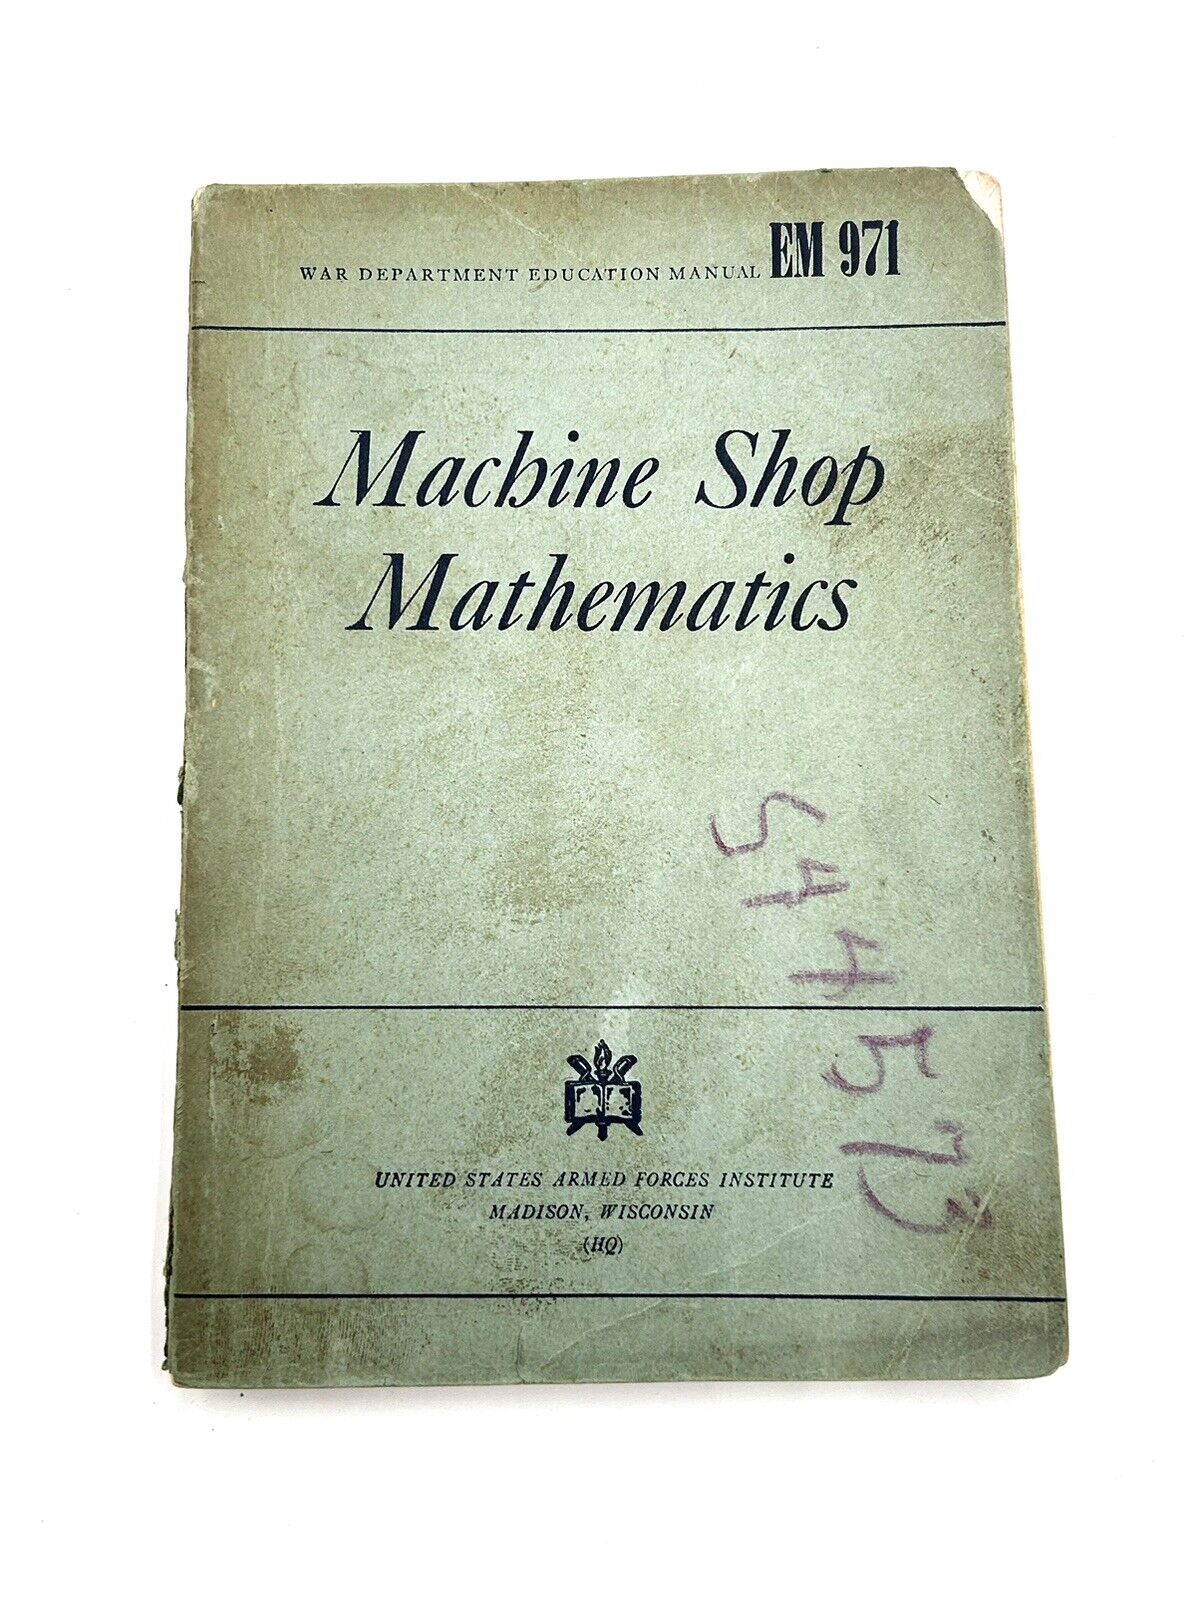 Machine Shop Mathematics War Department Education Manual EM 971 PB Book 1944